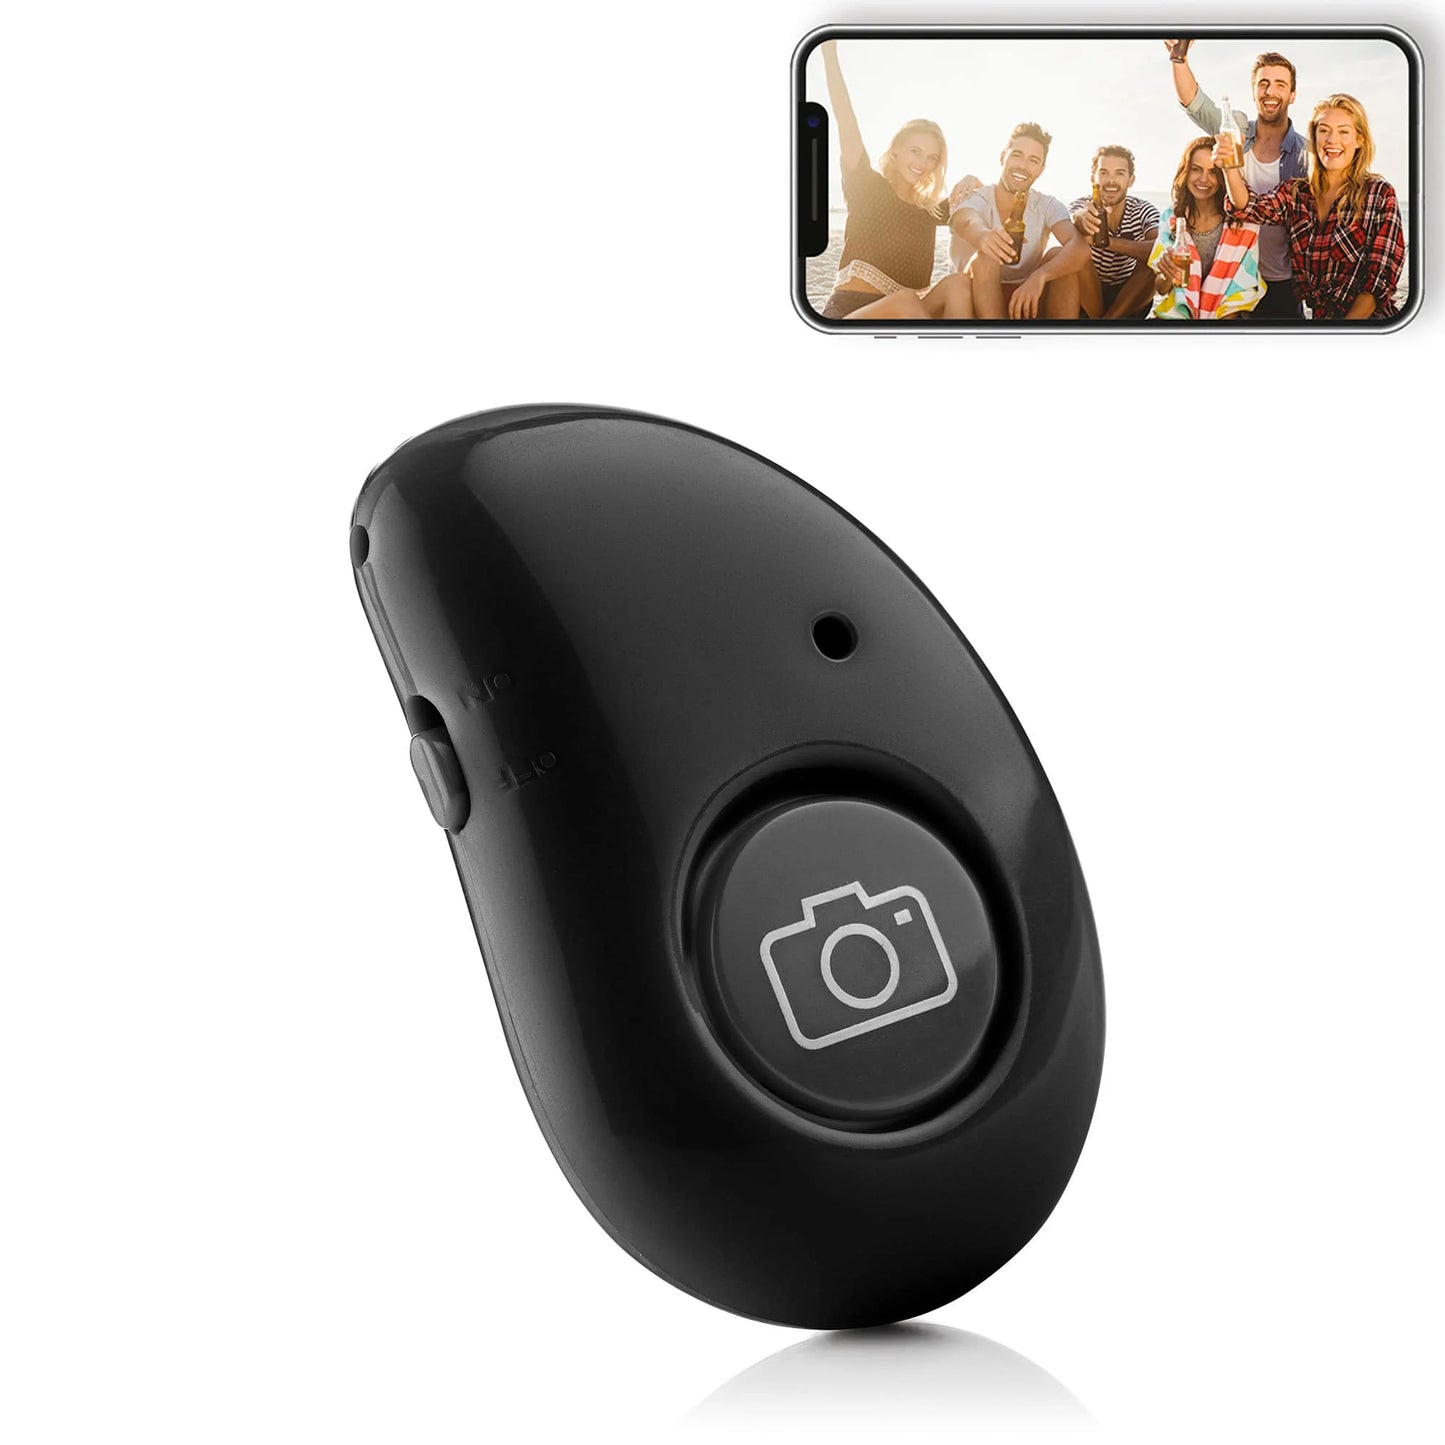 Bluetooth remote shutter afstandsbediening voor smartphone camera – verschillende kleuren - Zwart